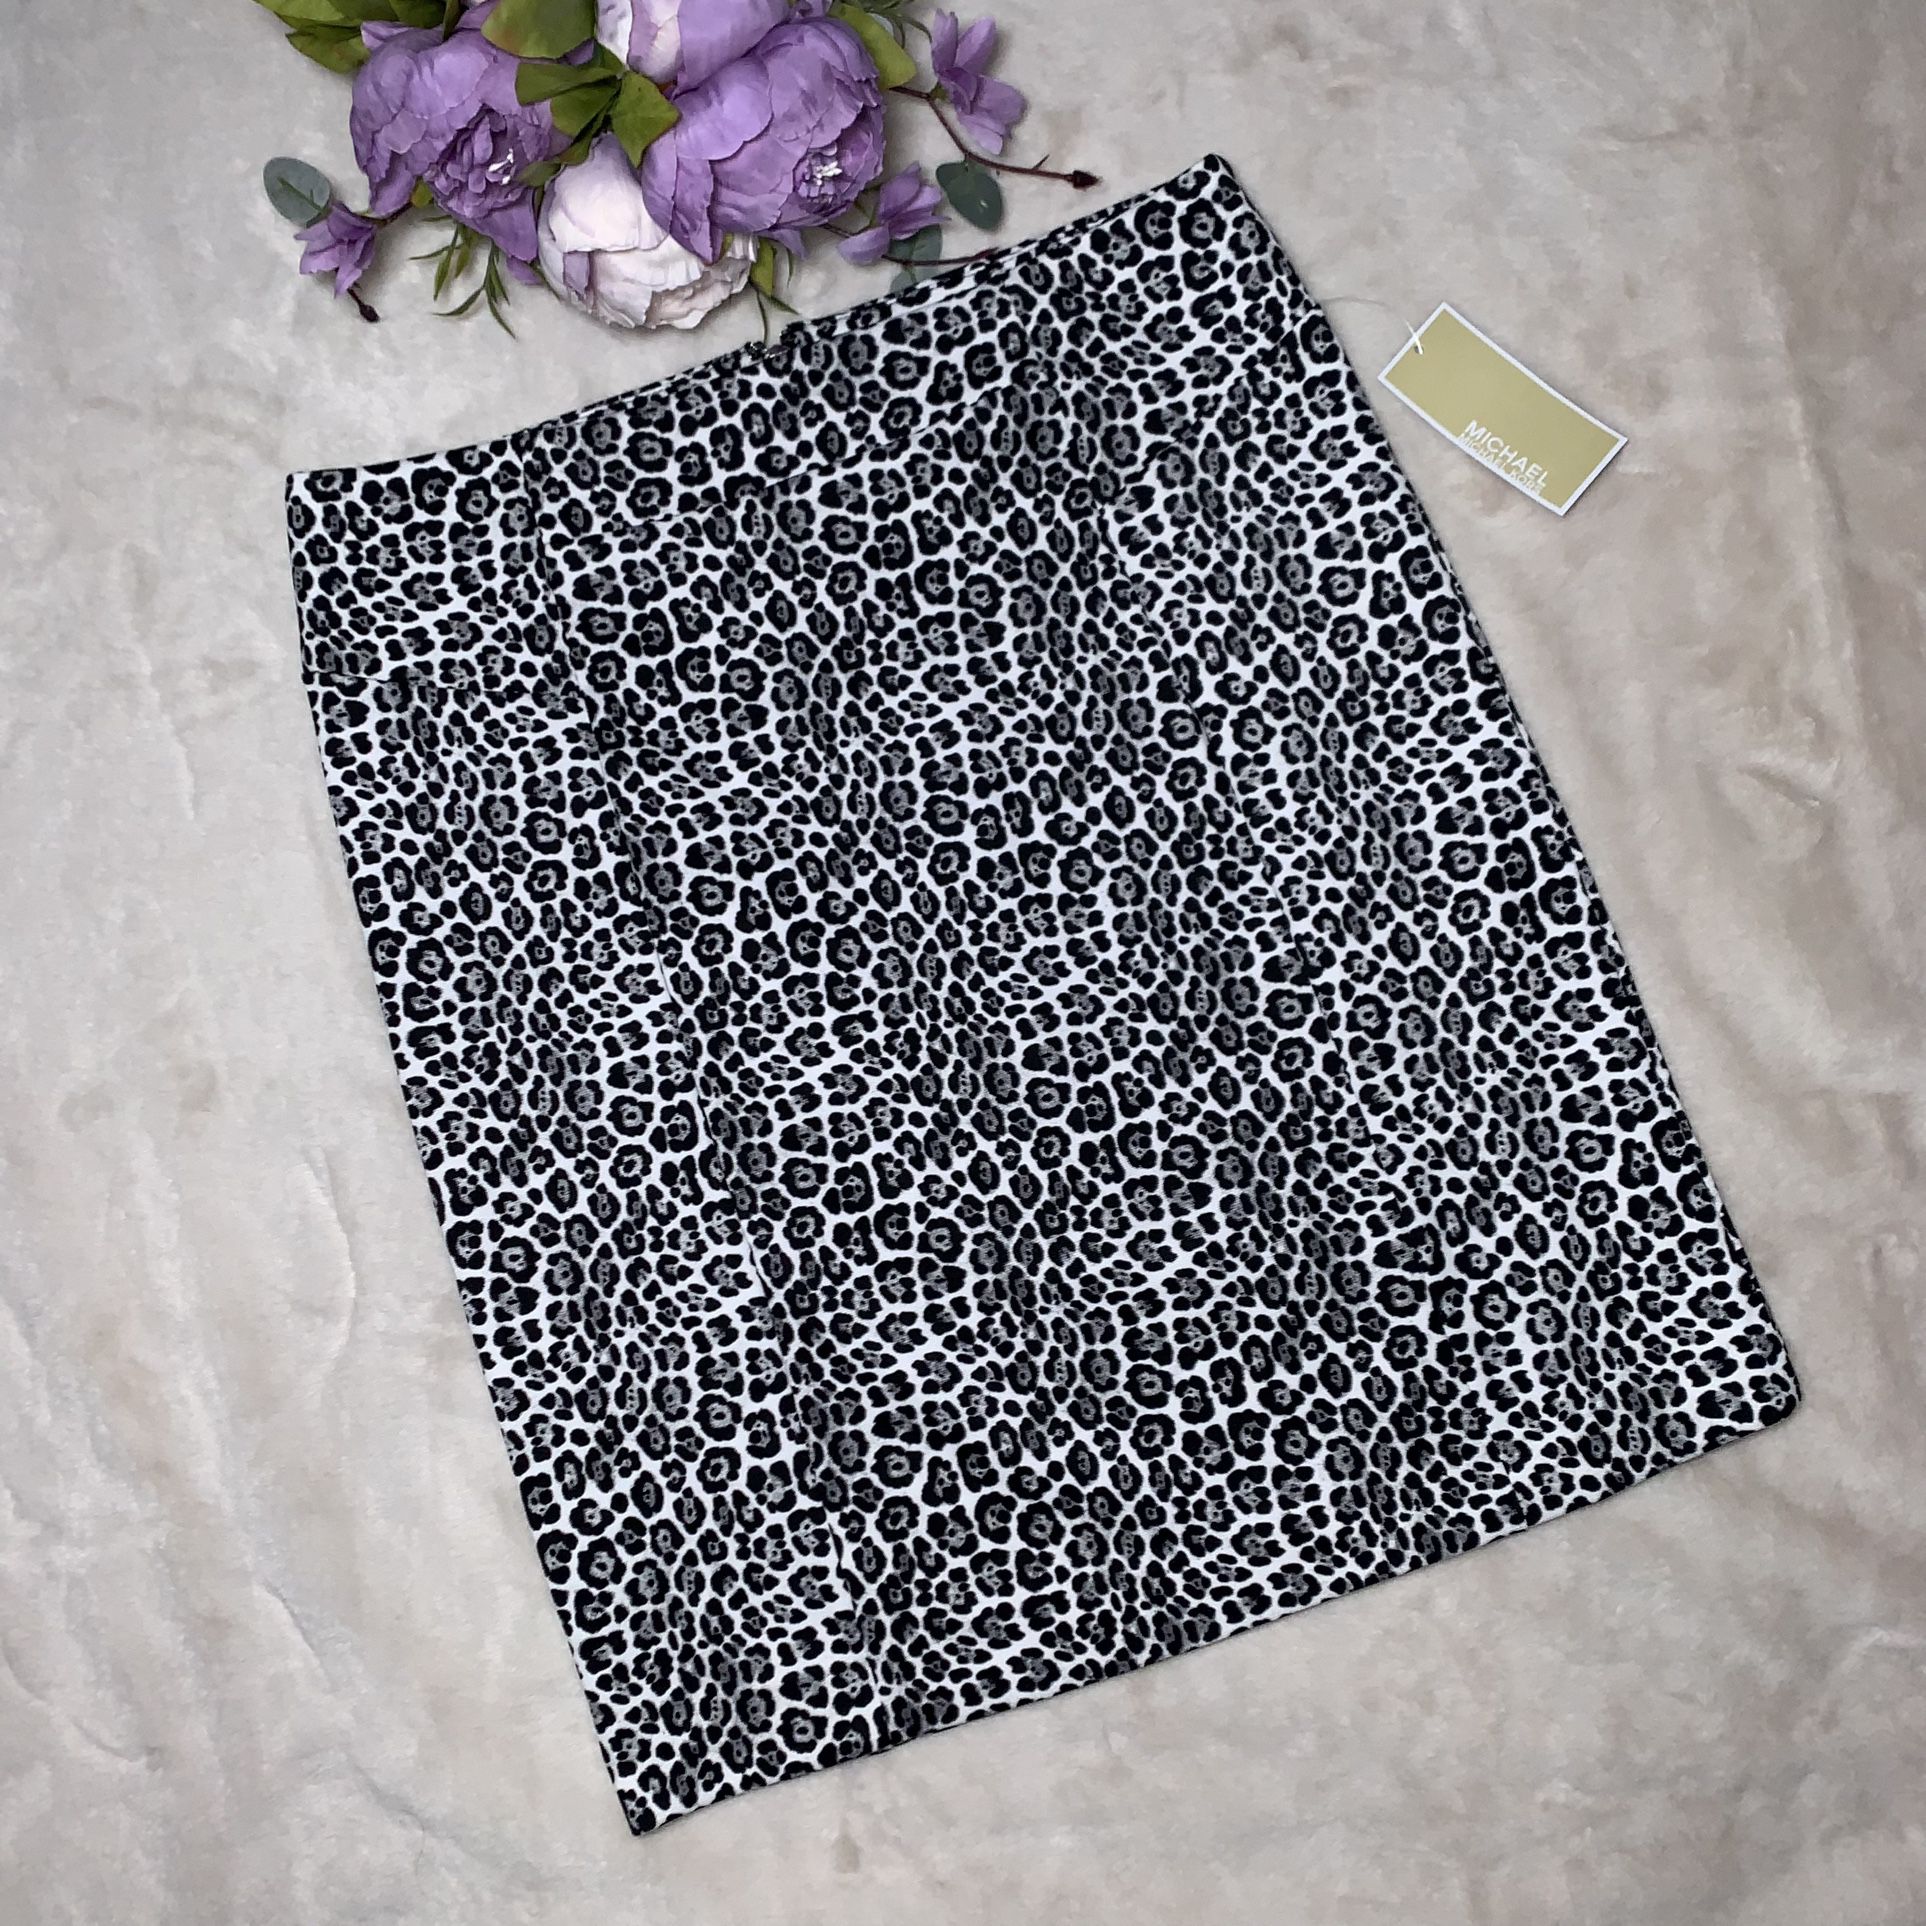 NWT Michael Kors Leopard Print Skirt